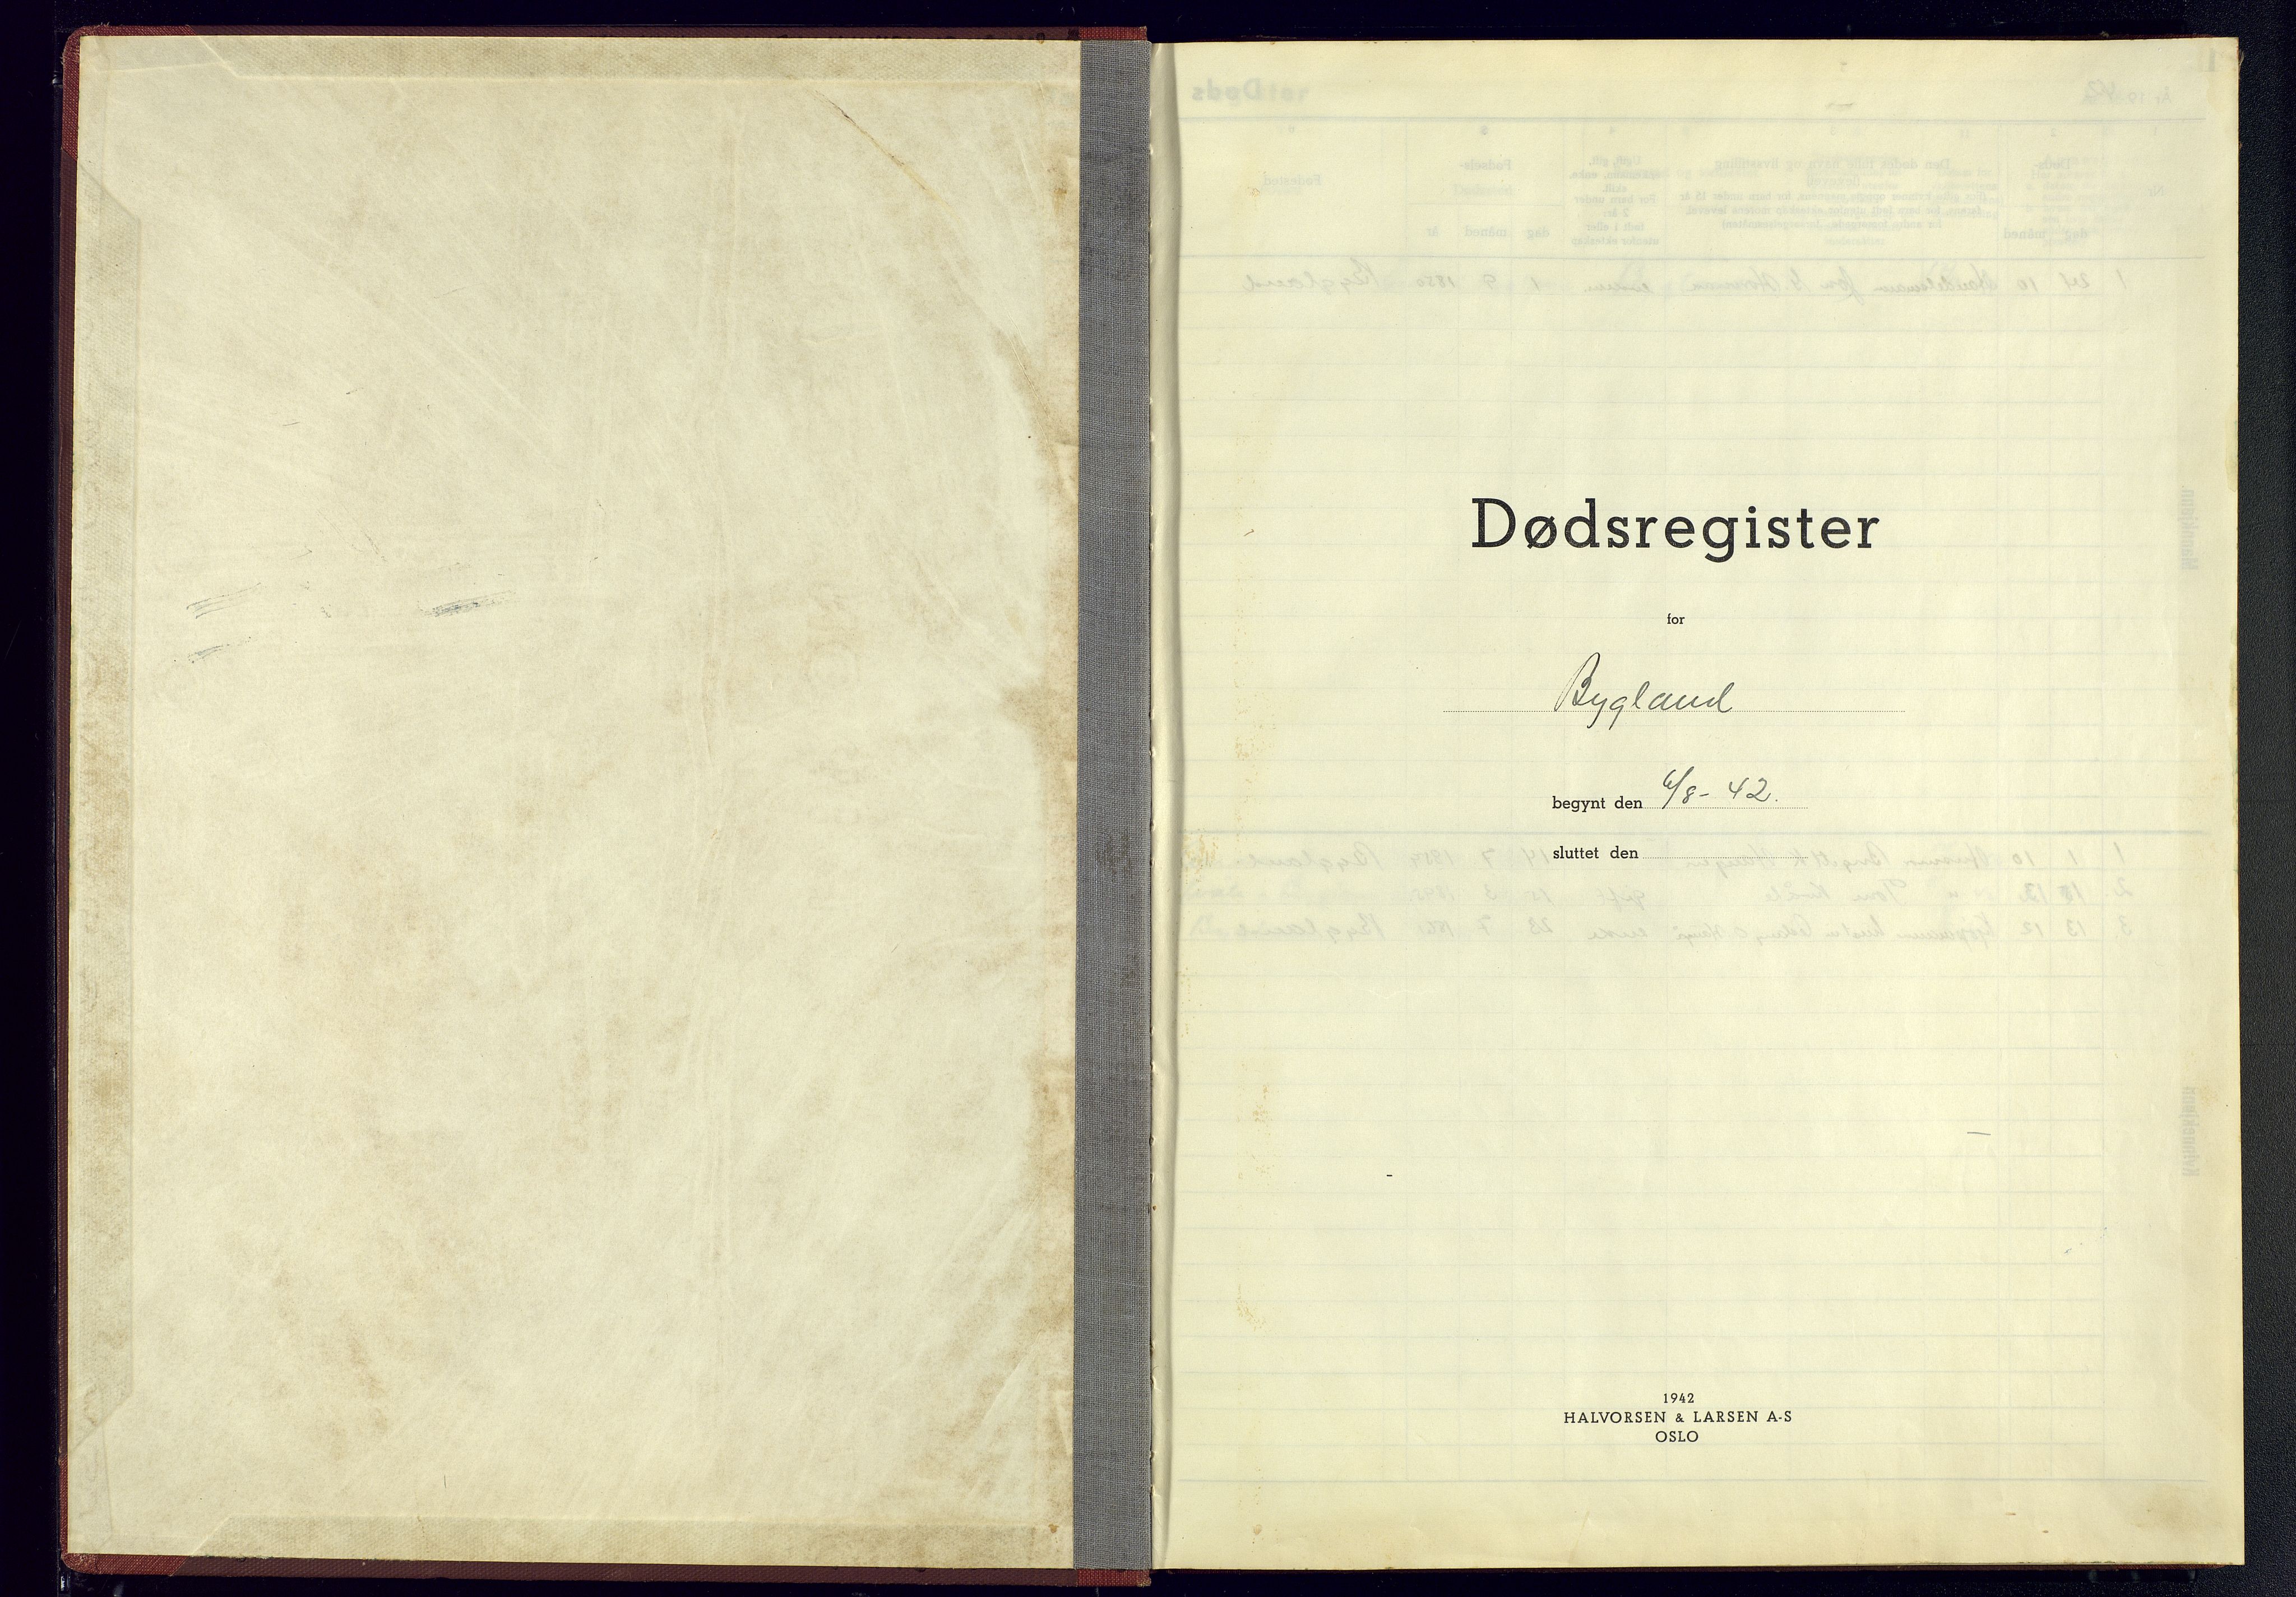 Bygland sokneprestkontor, SAK/1111-0006/J/Jb/L0003: II.6.3 - Dødsfallsregister Bygland, 1942-1945